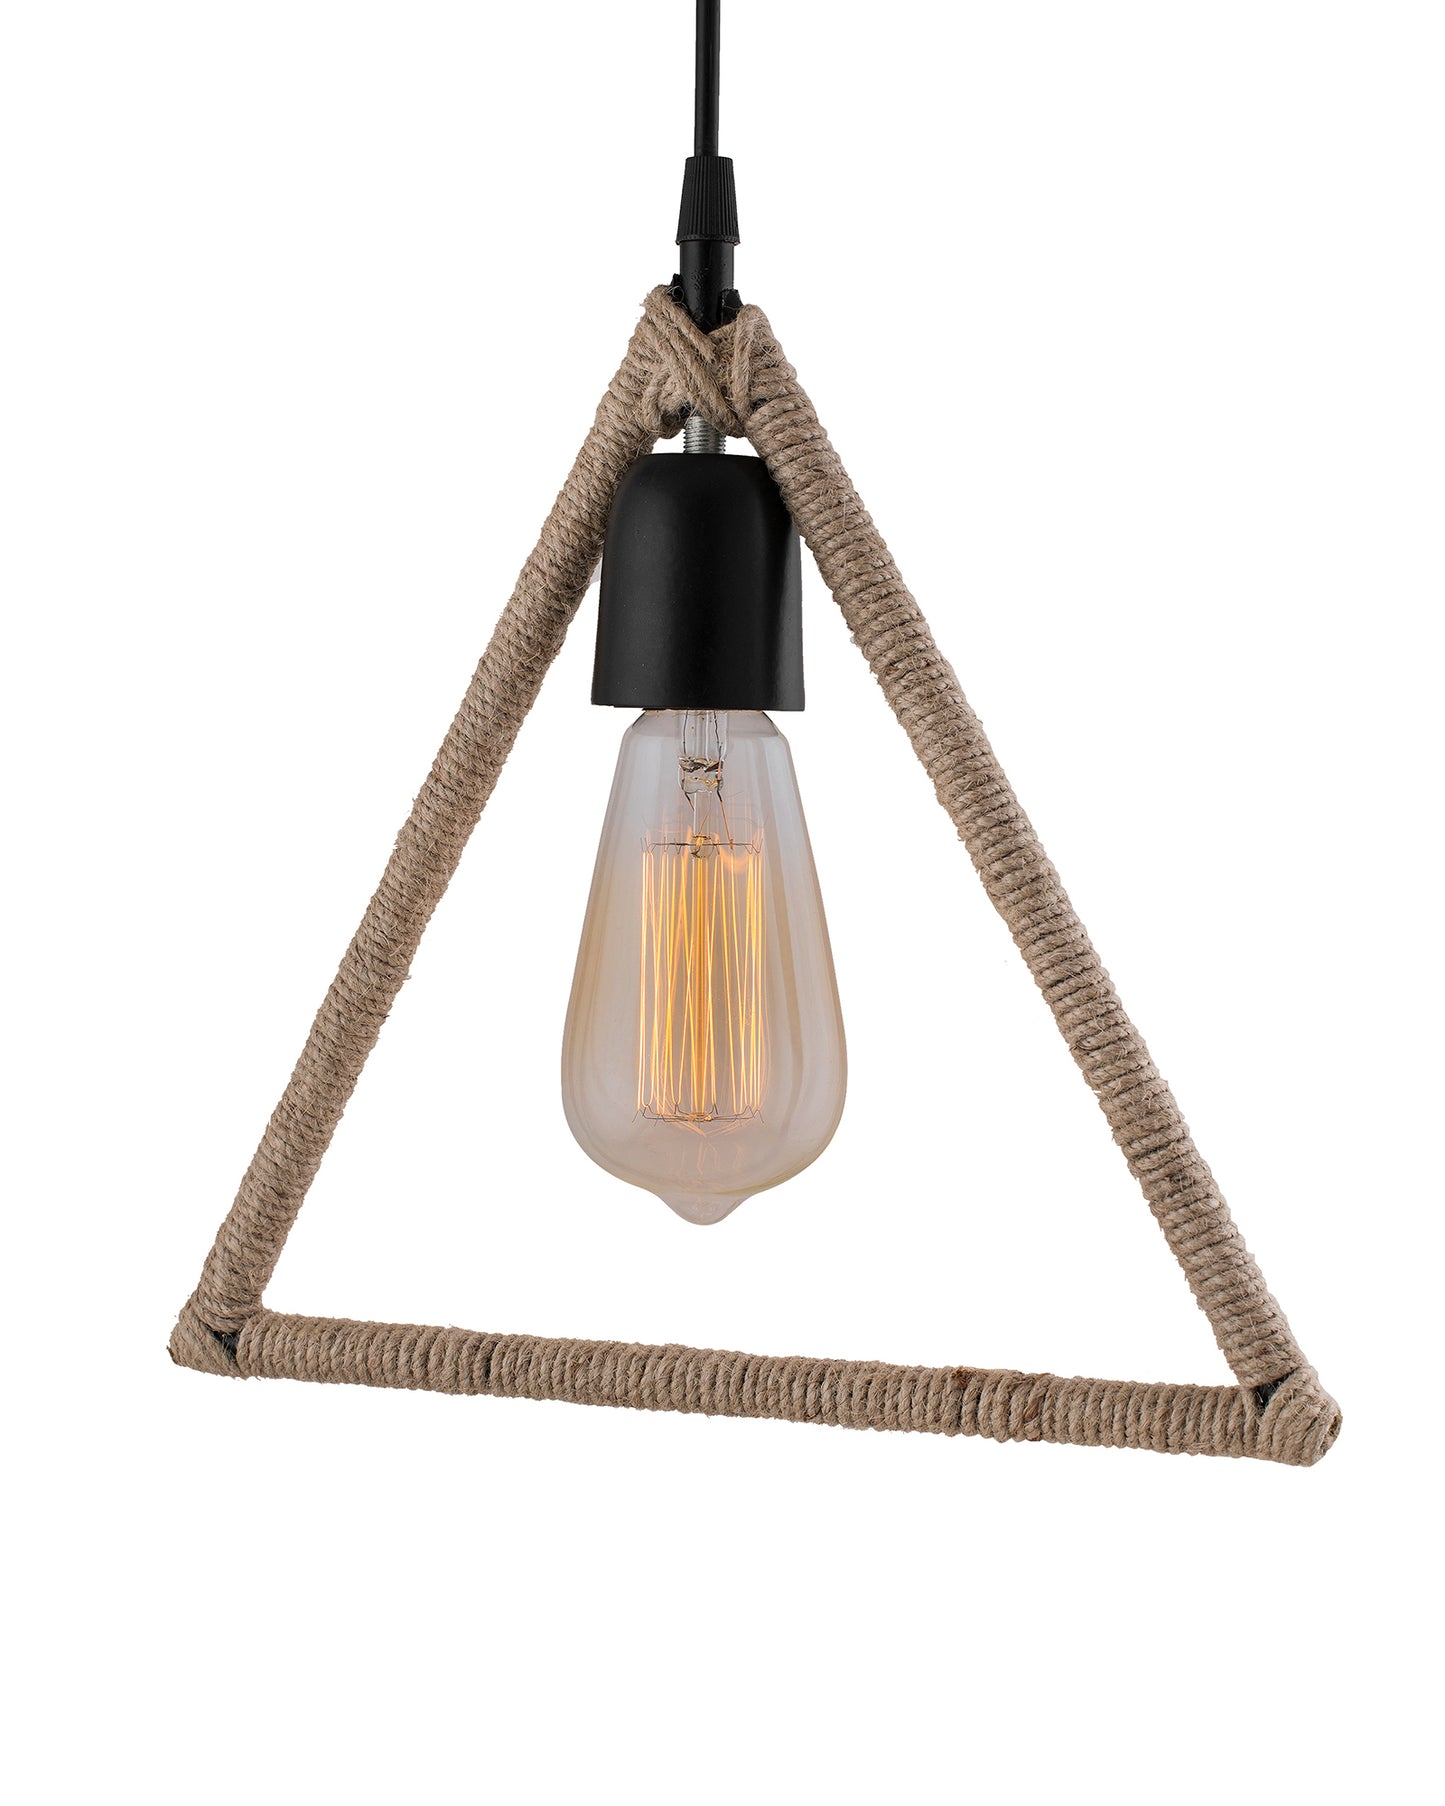 Modern Metal Pendant Lights Hemp Rope Decor Hanging Lamp E27 Loft Ceiling Light with filament bulb, Triangle